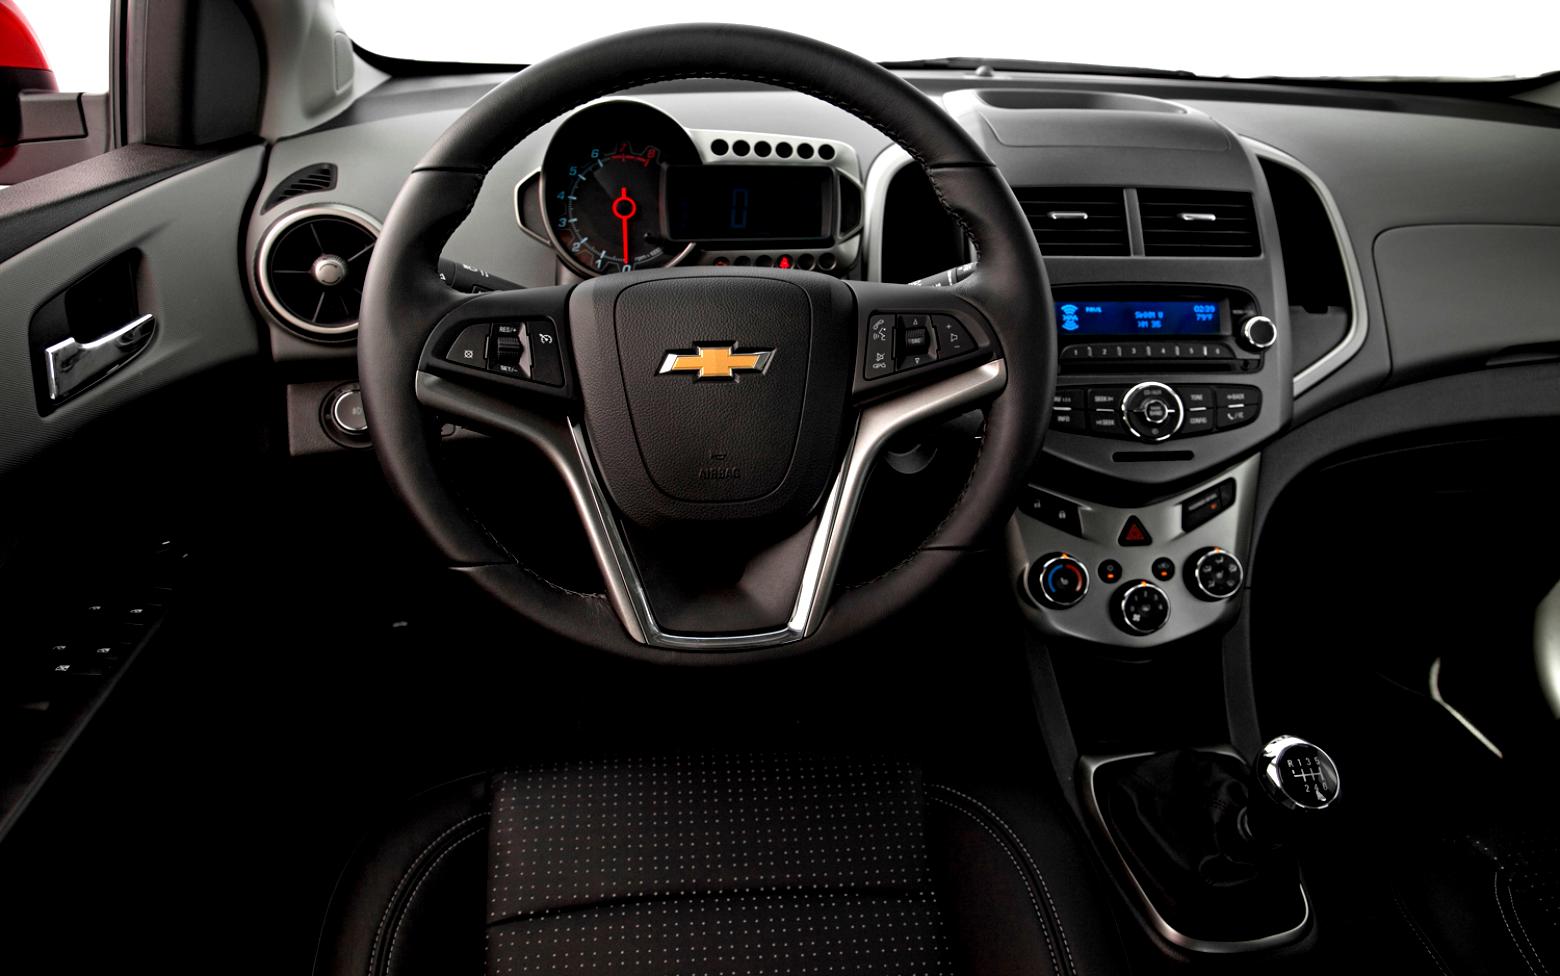 Chevrolet Sonic RS 2012 #12